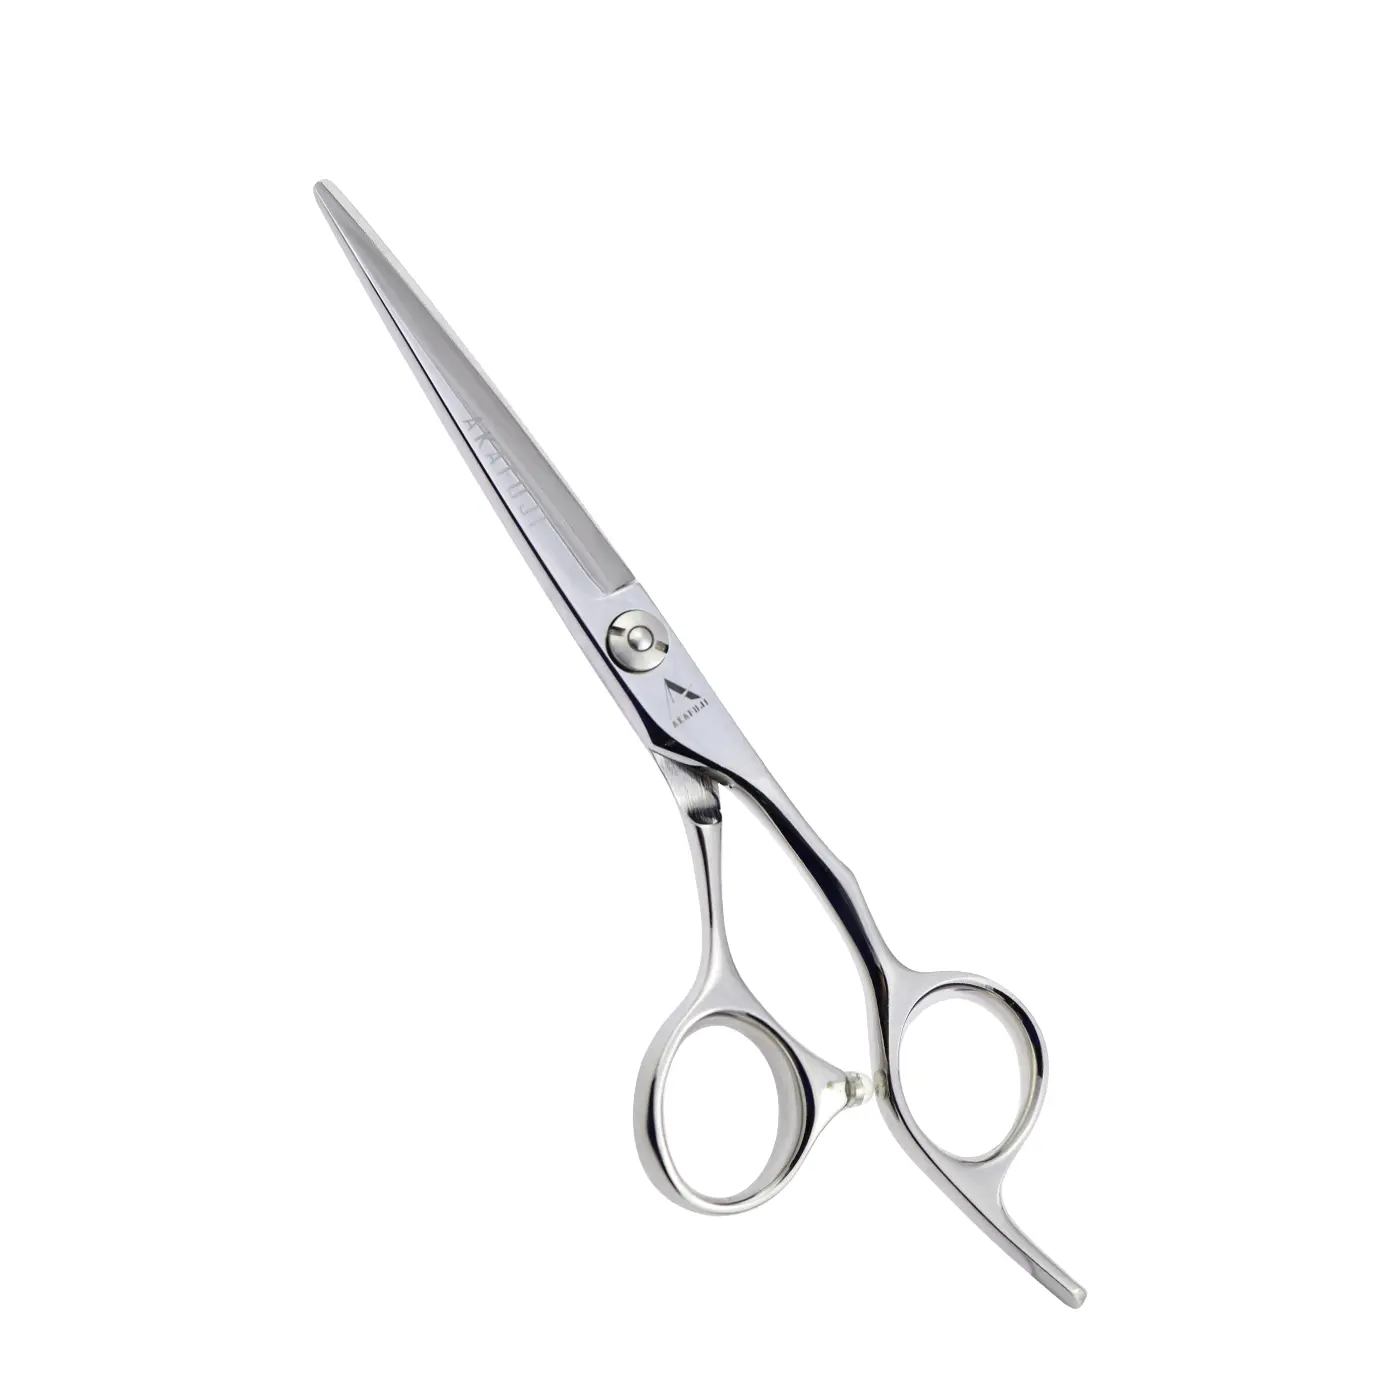 Viko Company Hair Scissors Set Japanische profession elle AKAFUJI Haars ch neides chere CA-603 & TA-322